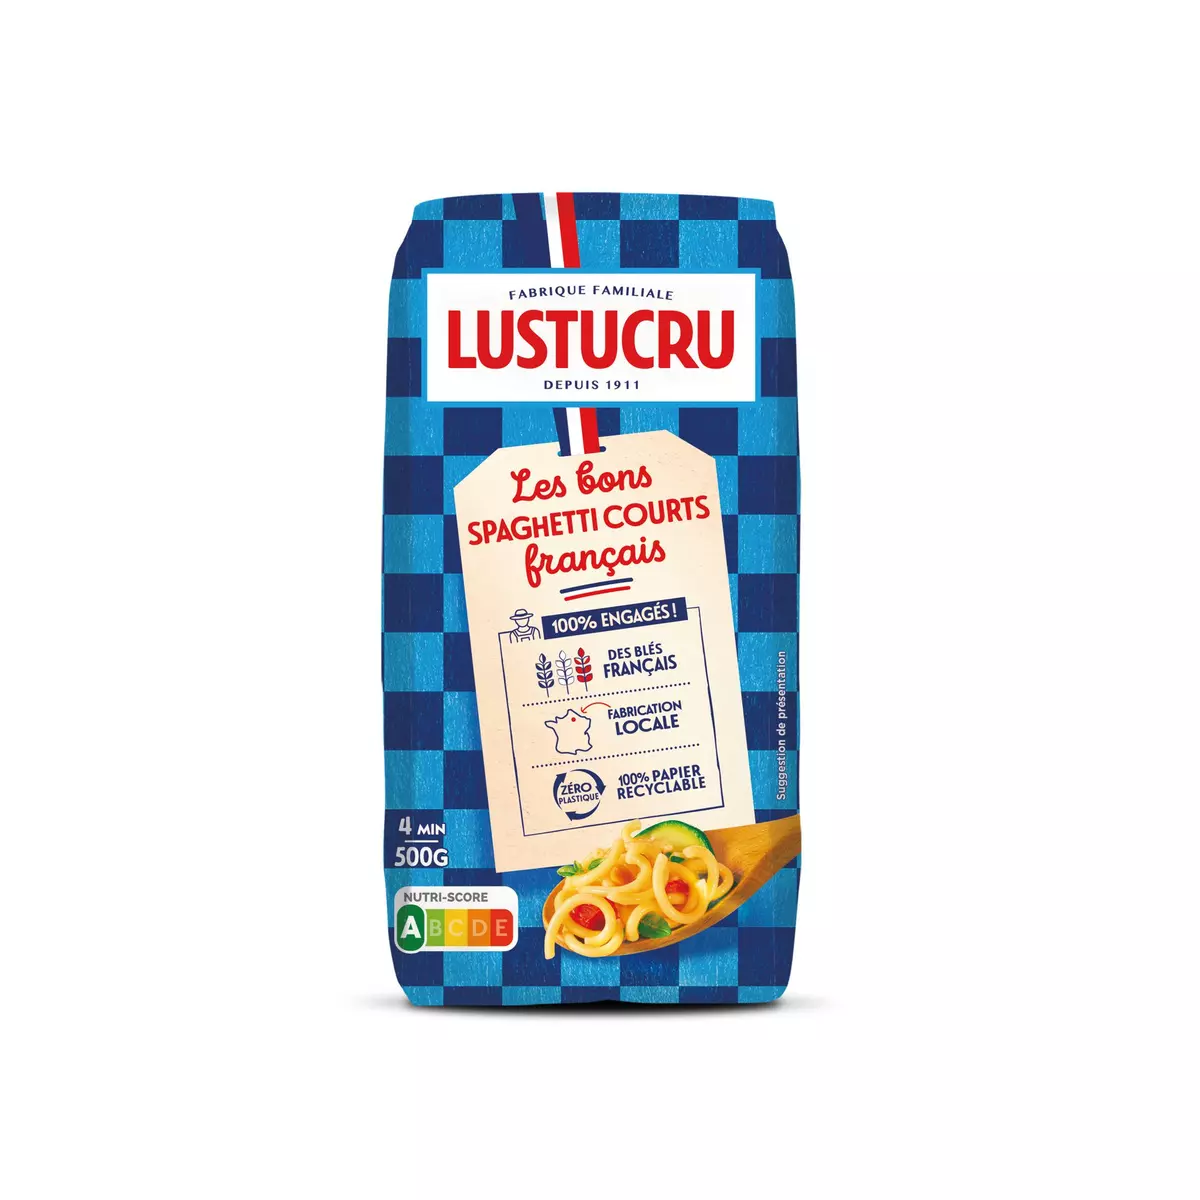 LUSTUCRU Spaghetti courts français 500g